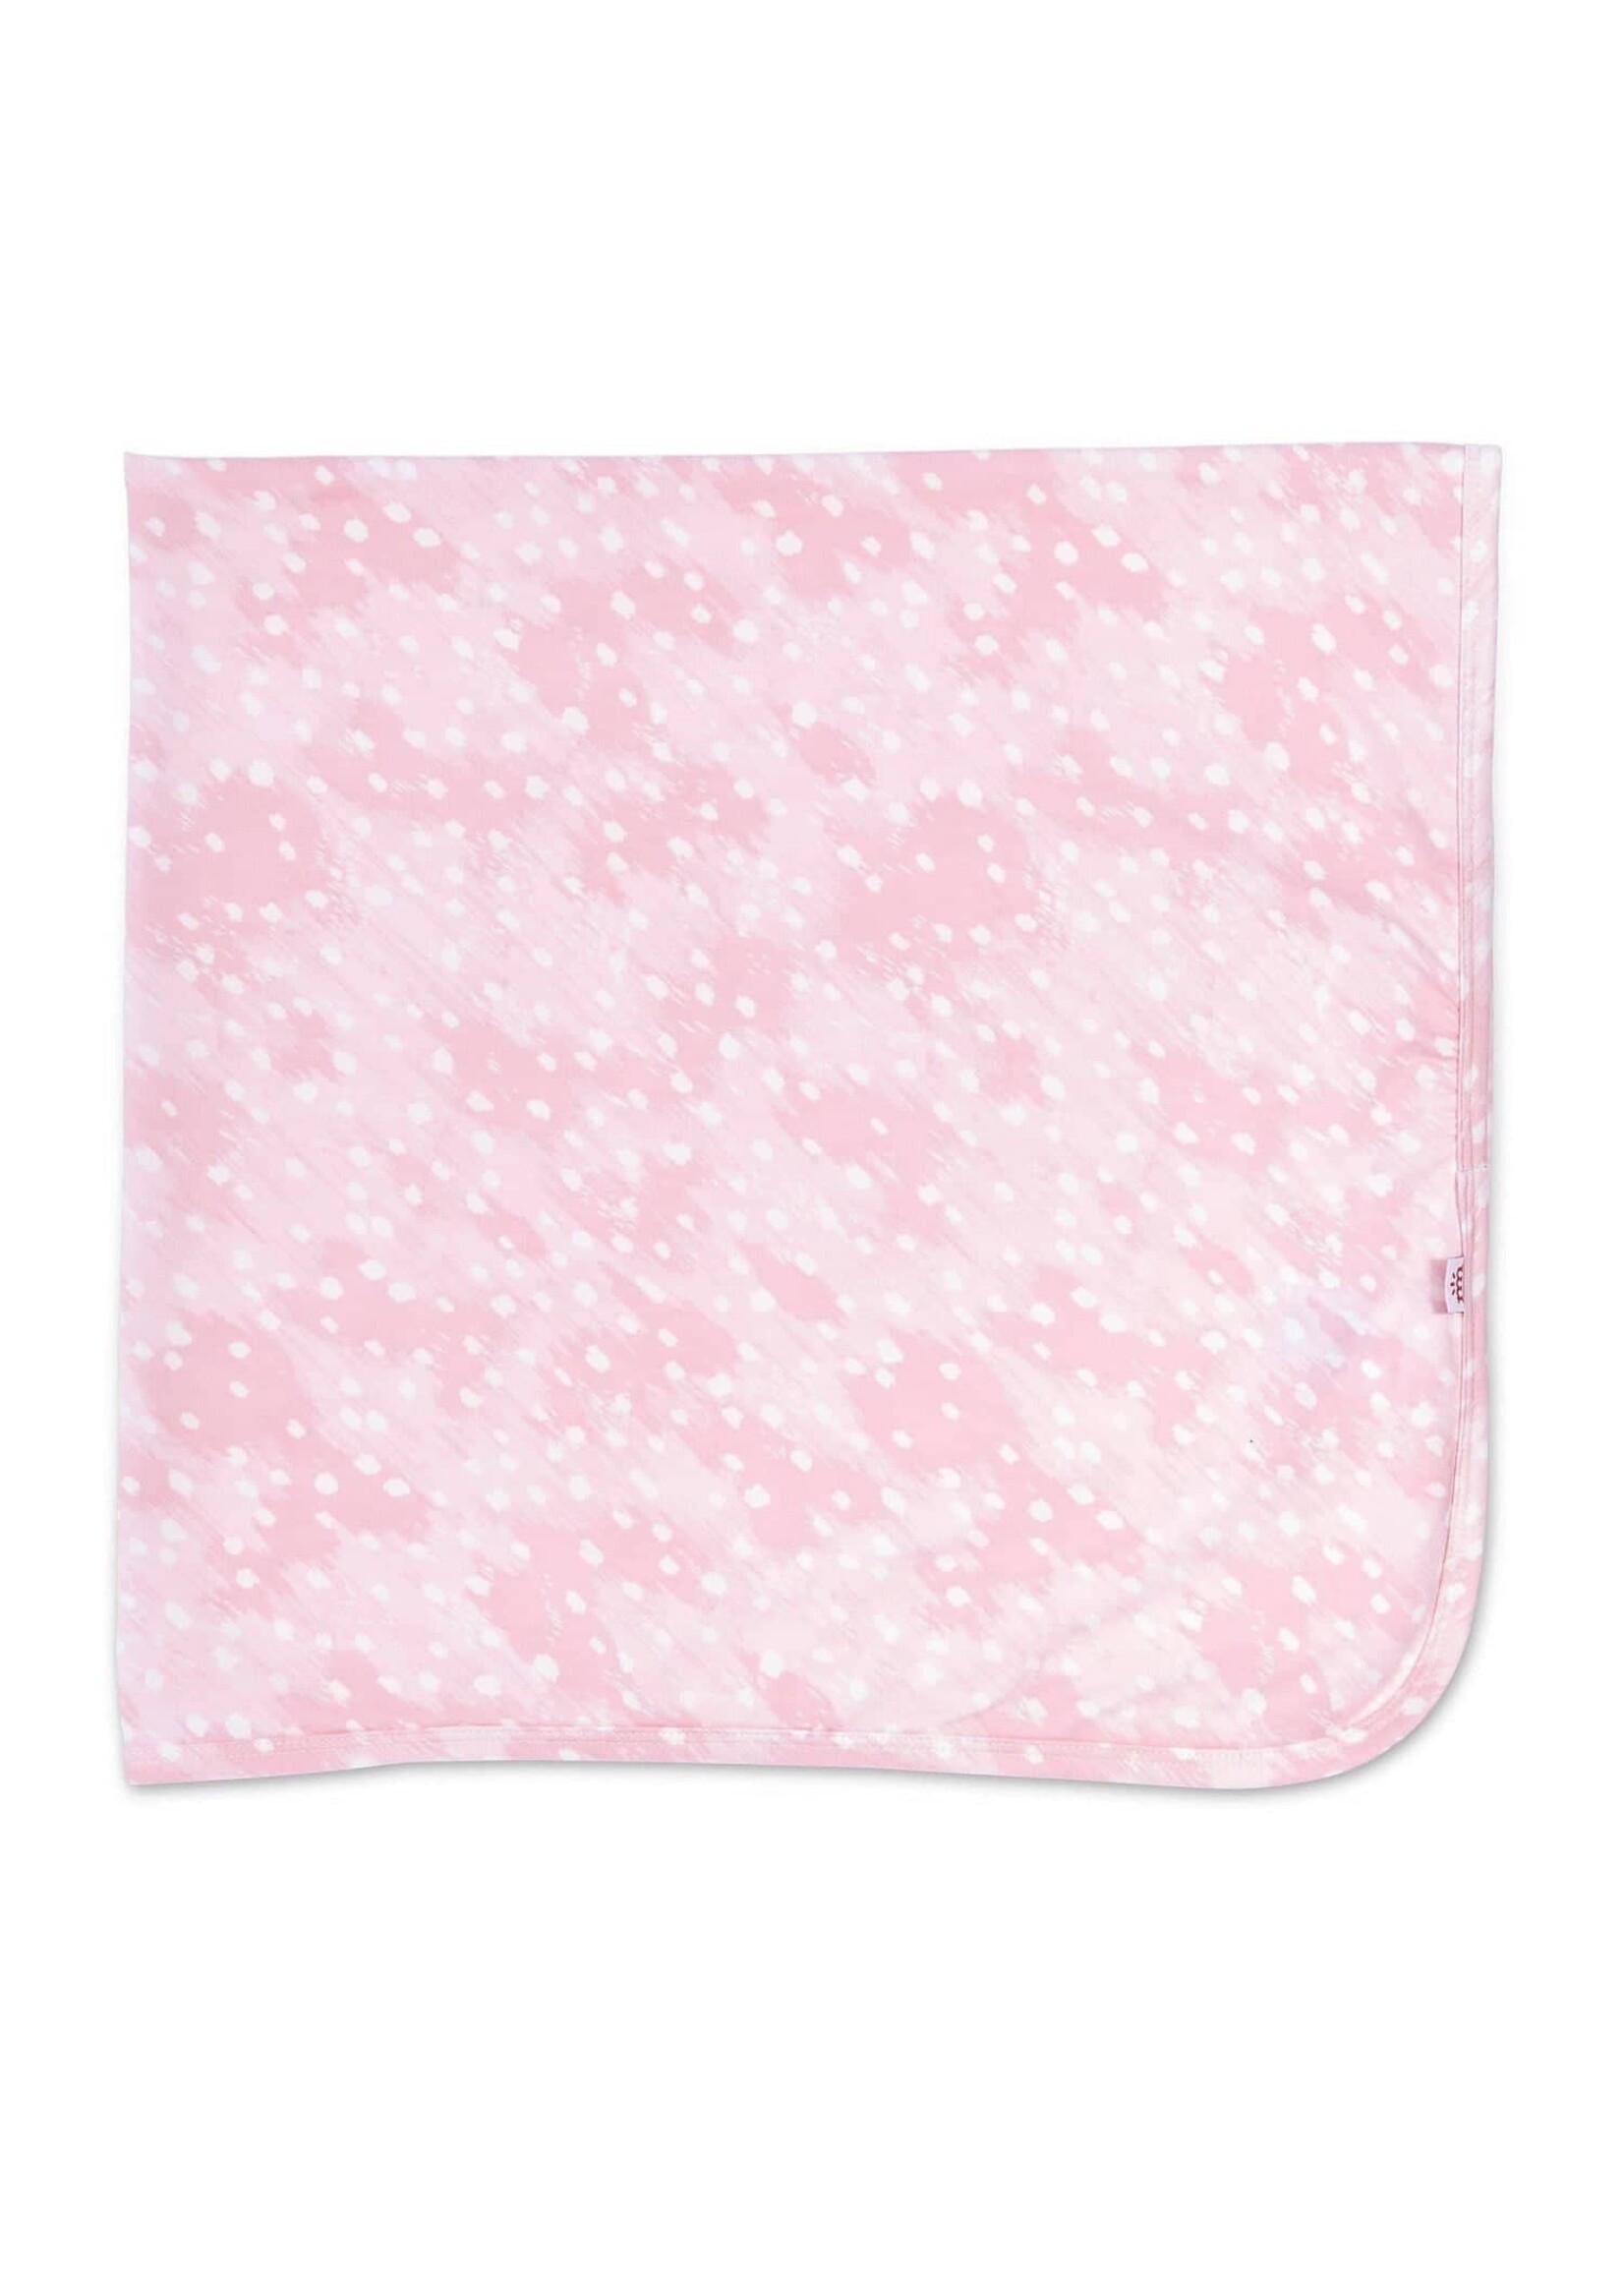 magnetic me Pink Doeskin Modal Baby Blanket